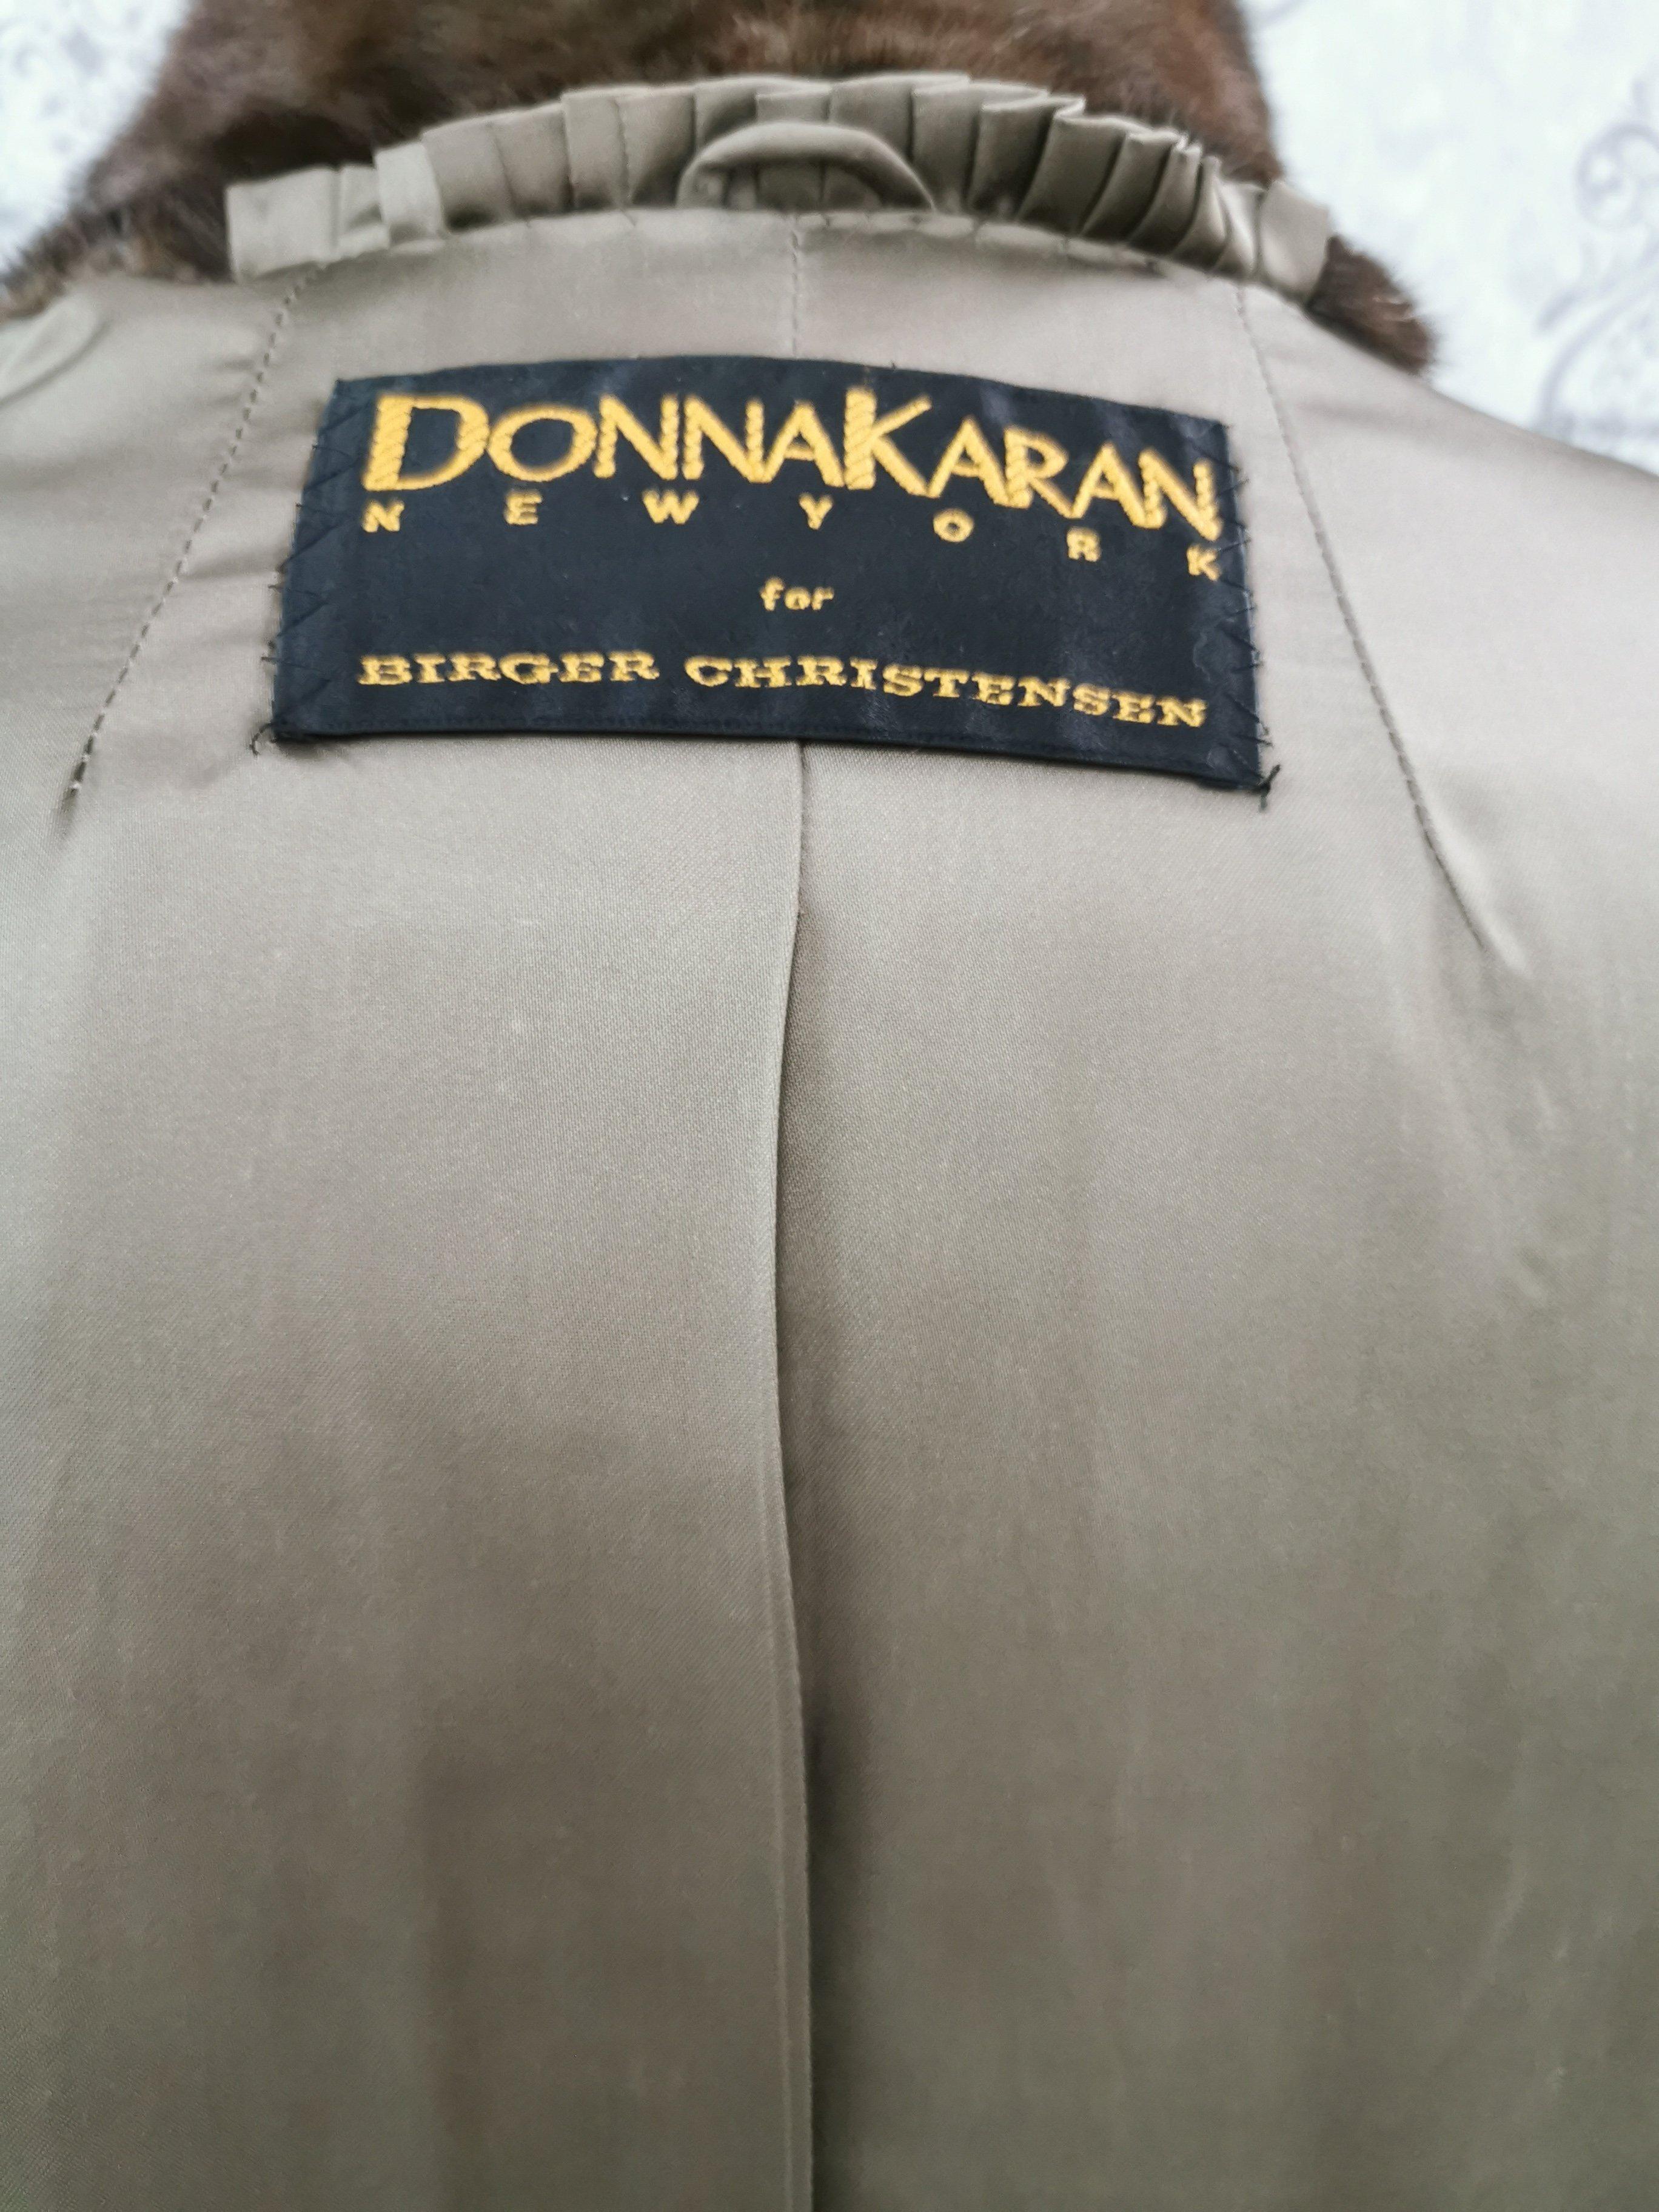 Donna Karan New York for Birger Christensen Demi-Buff Mink Fur Coat (Size 12) For Sale 2